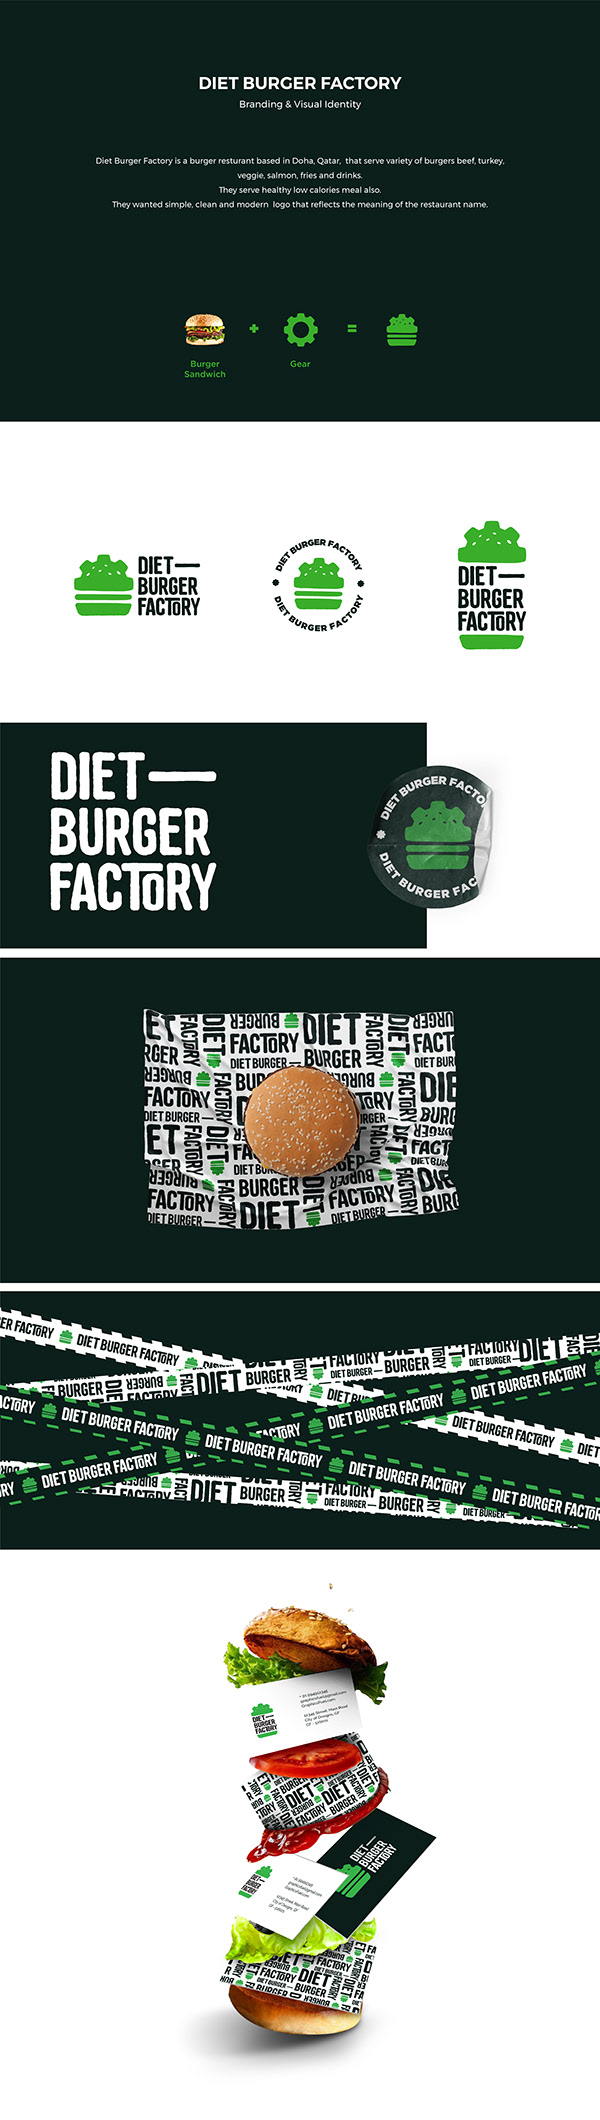 Diet Burger Factory I Qatar